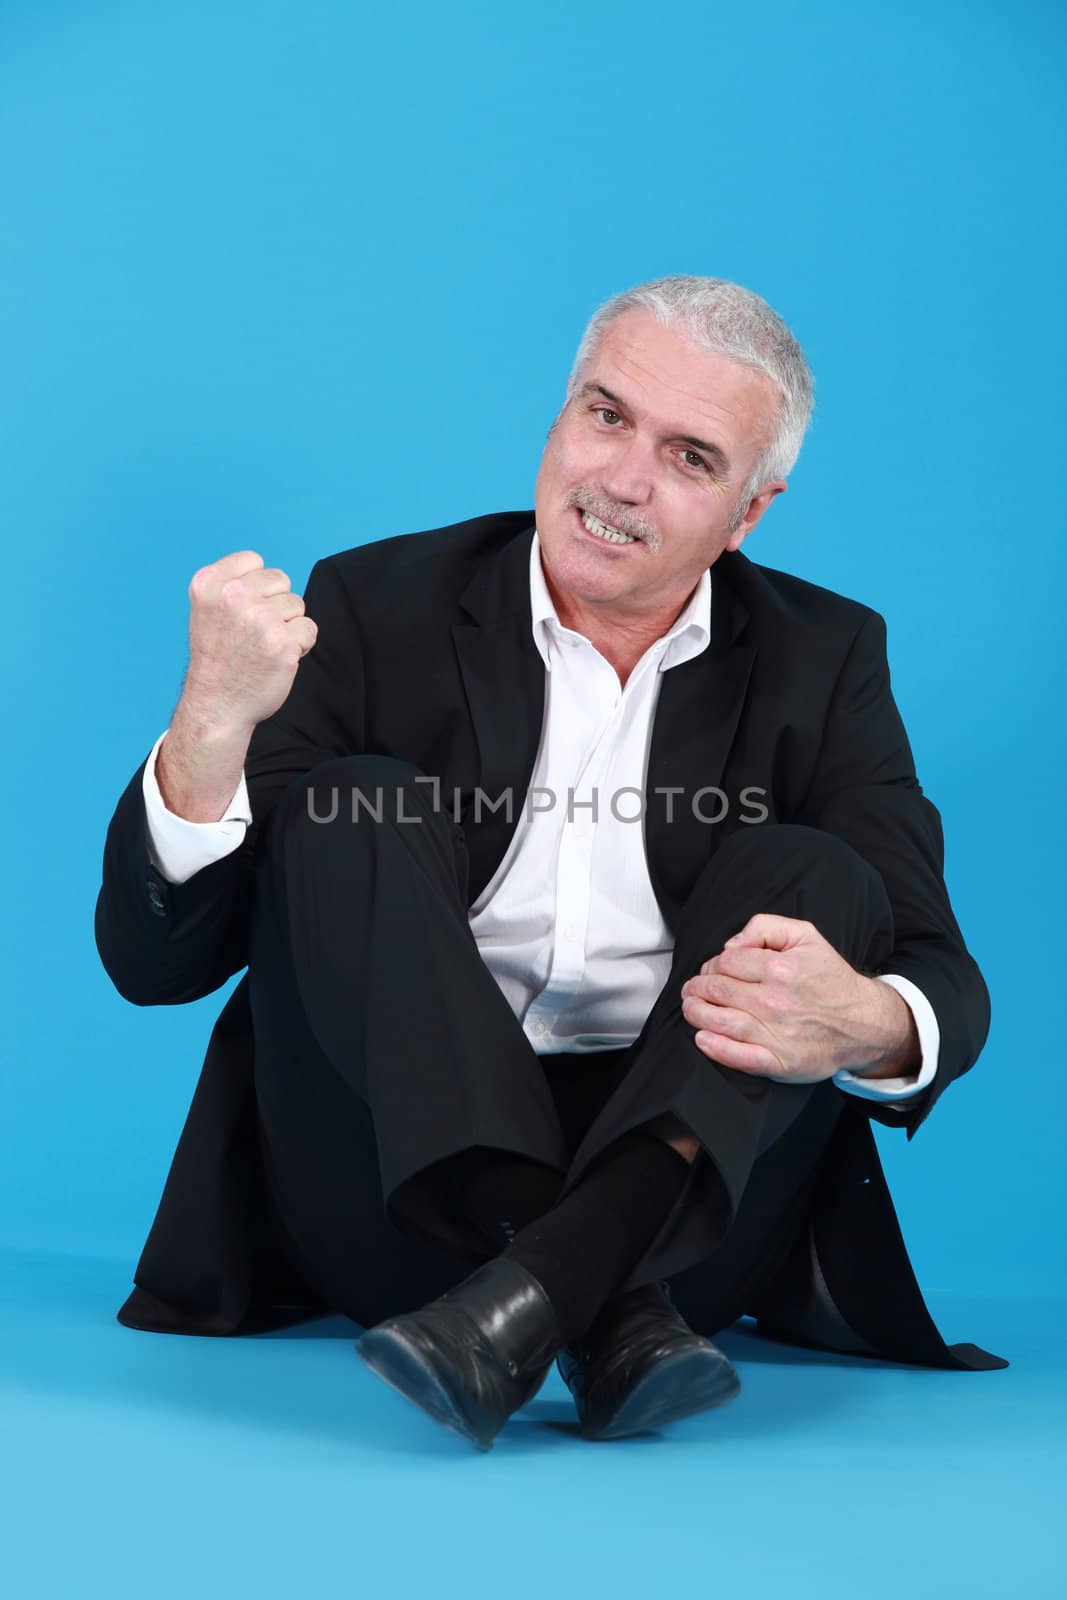 An angry man sitting cross-legged